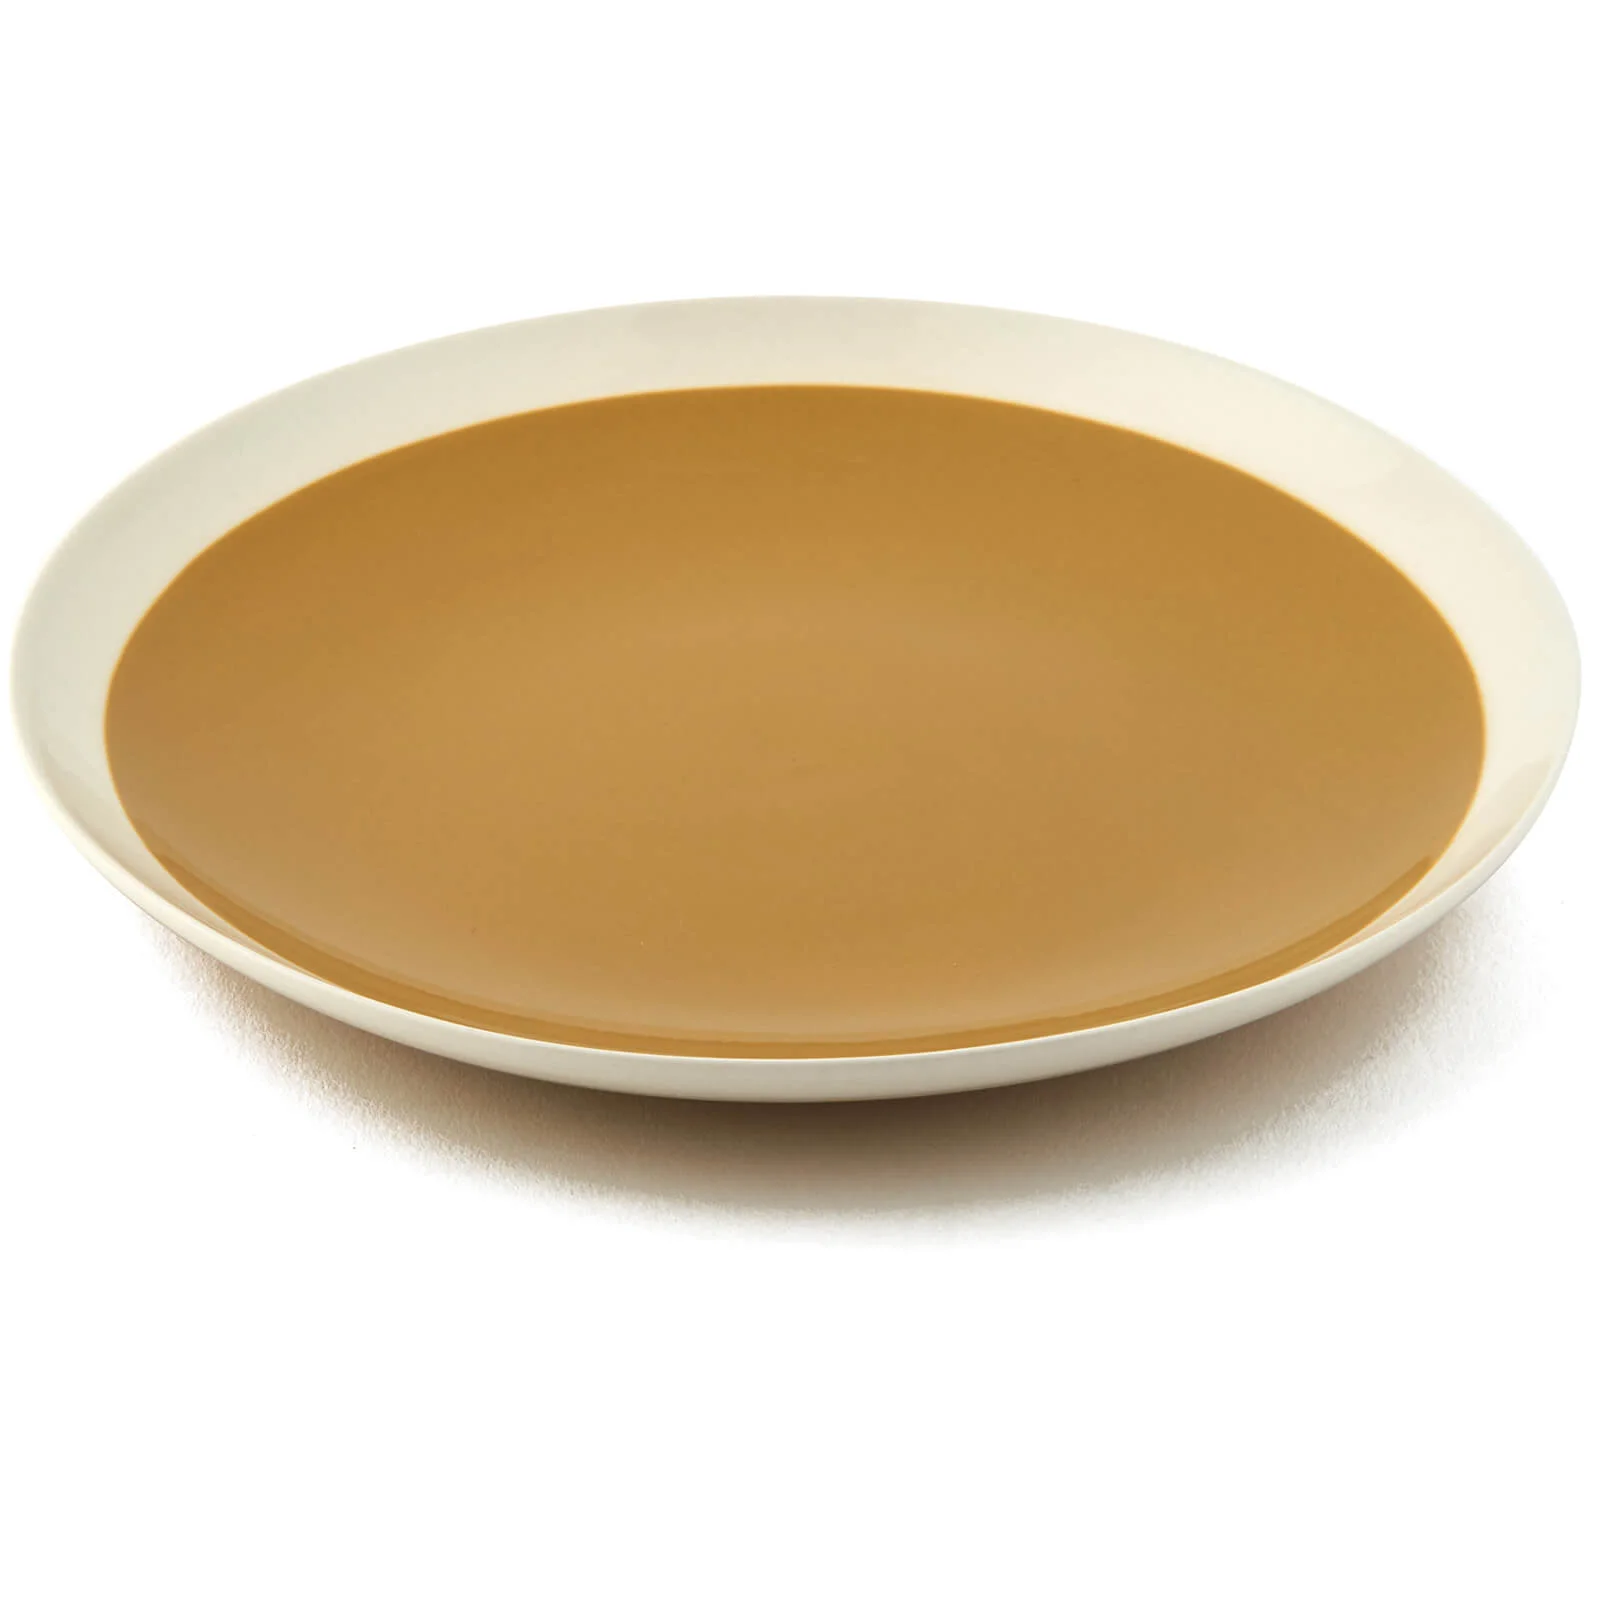 Nkuku Datia Side Plate - Mustard Image 1